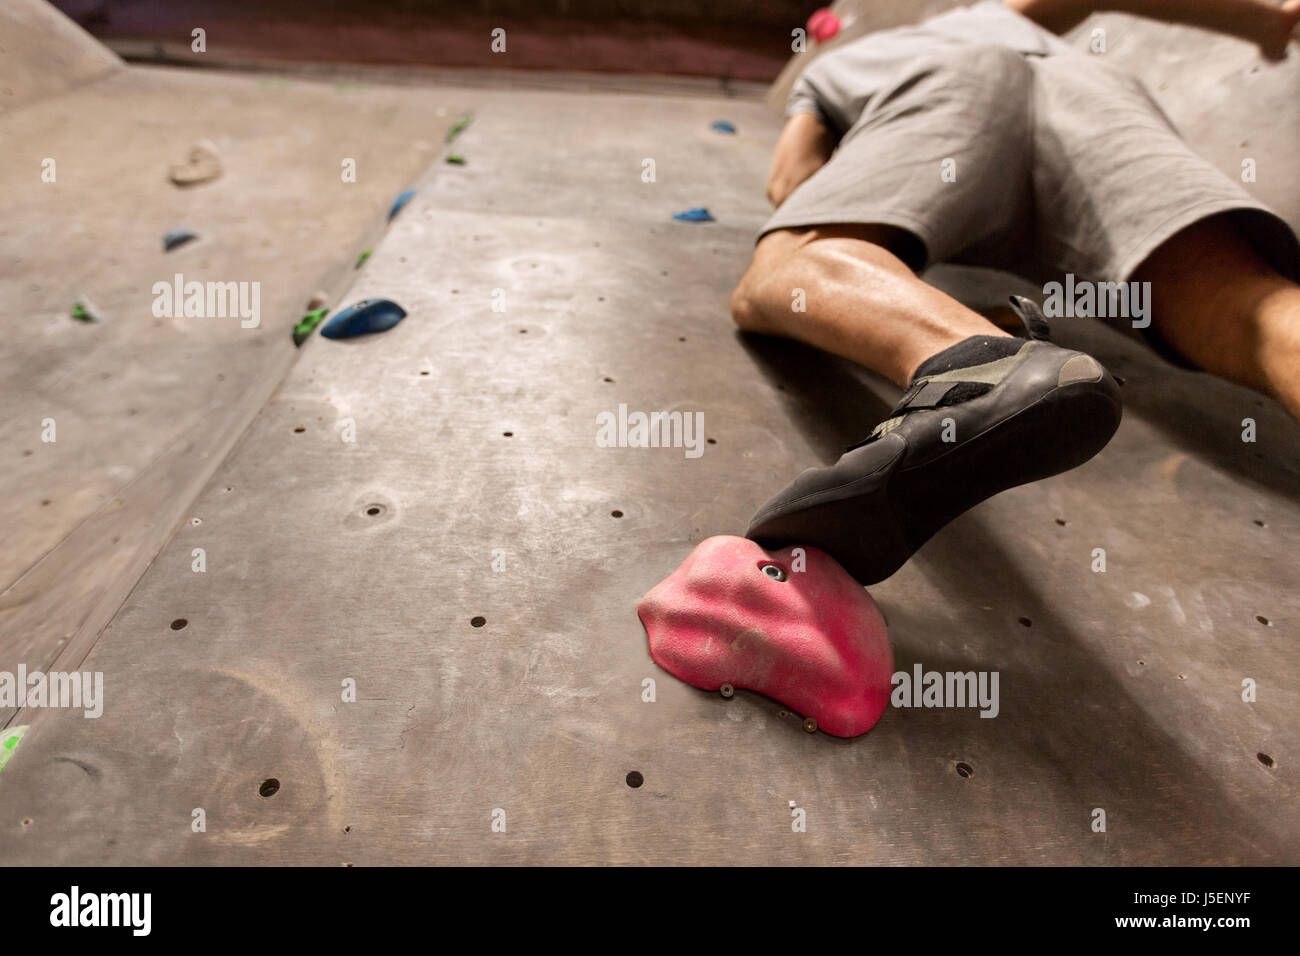 foot of man exercising at indoor climbing gym Stock Photo